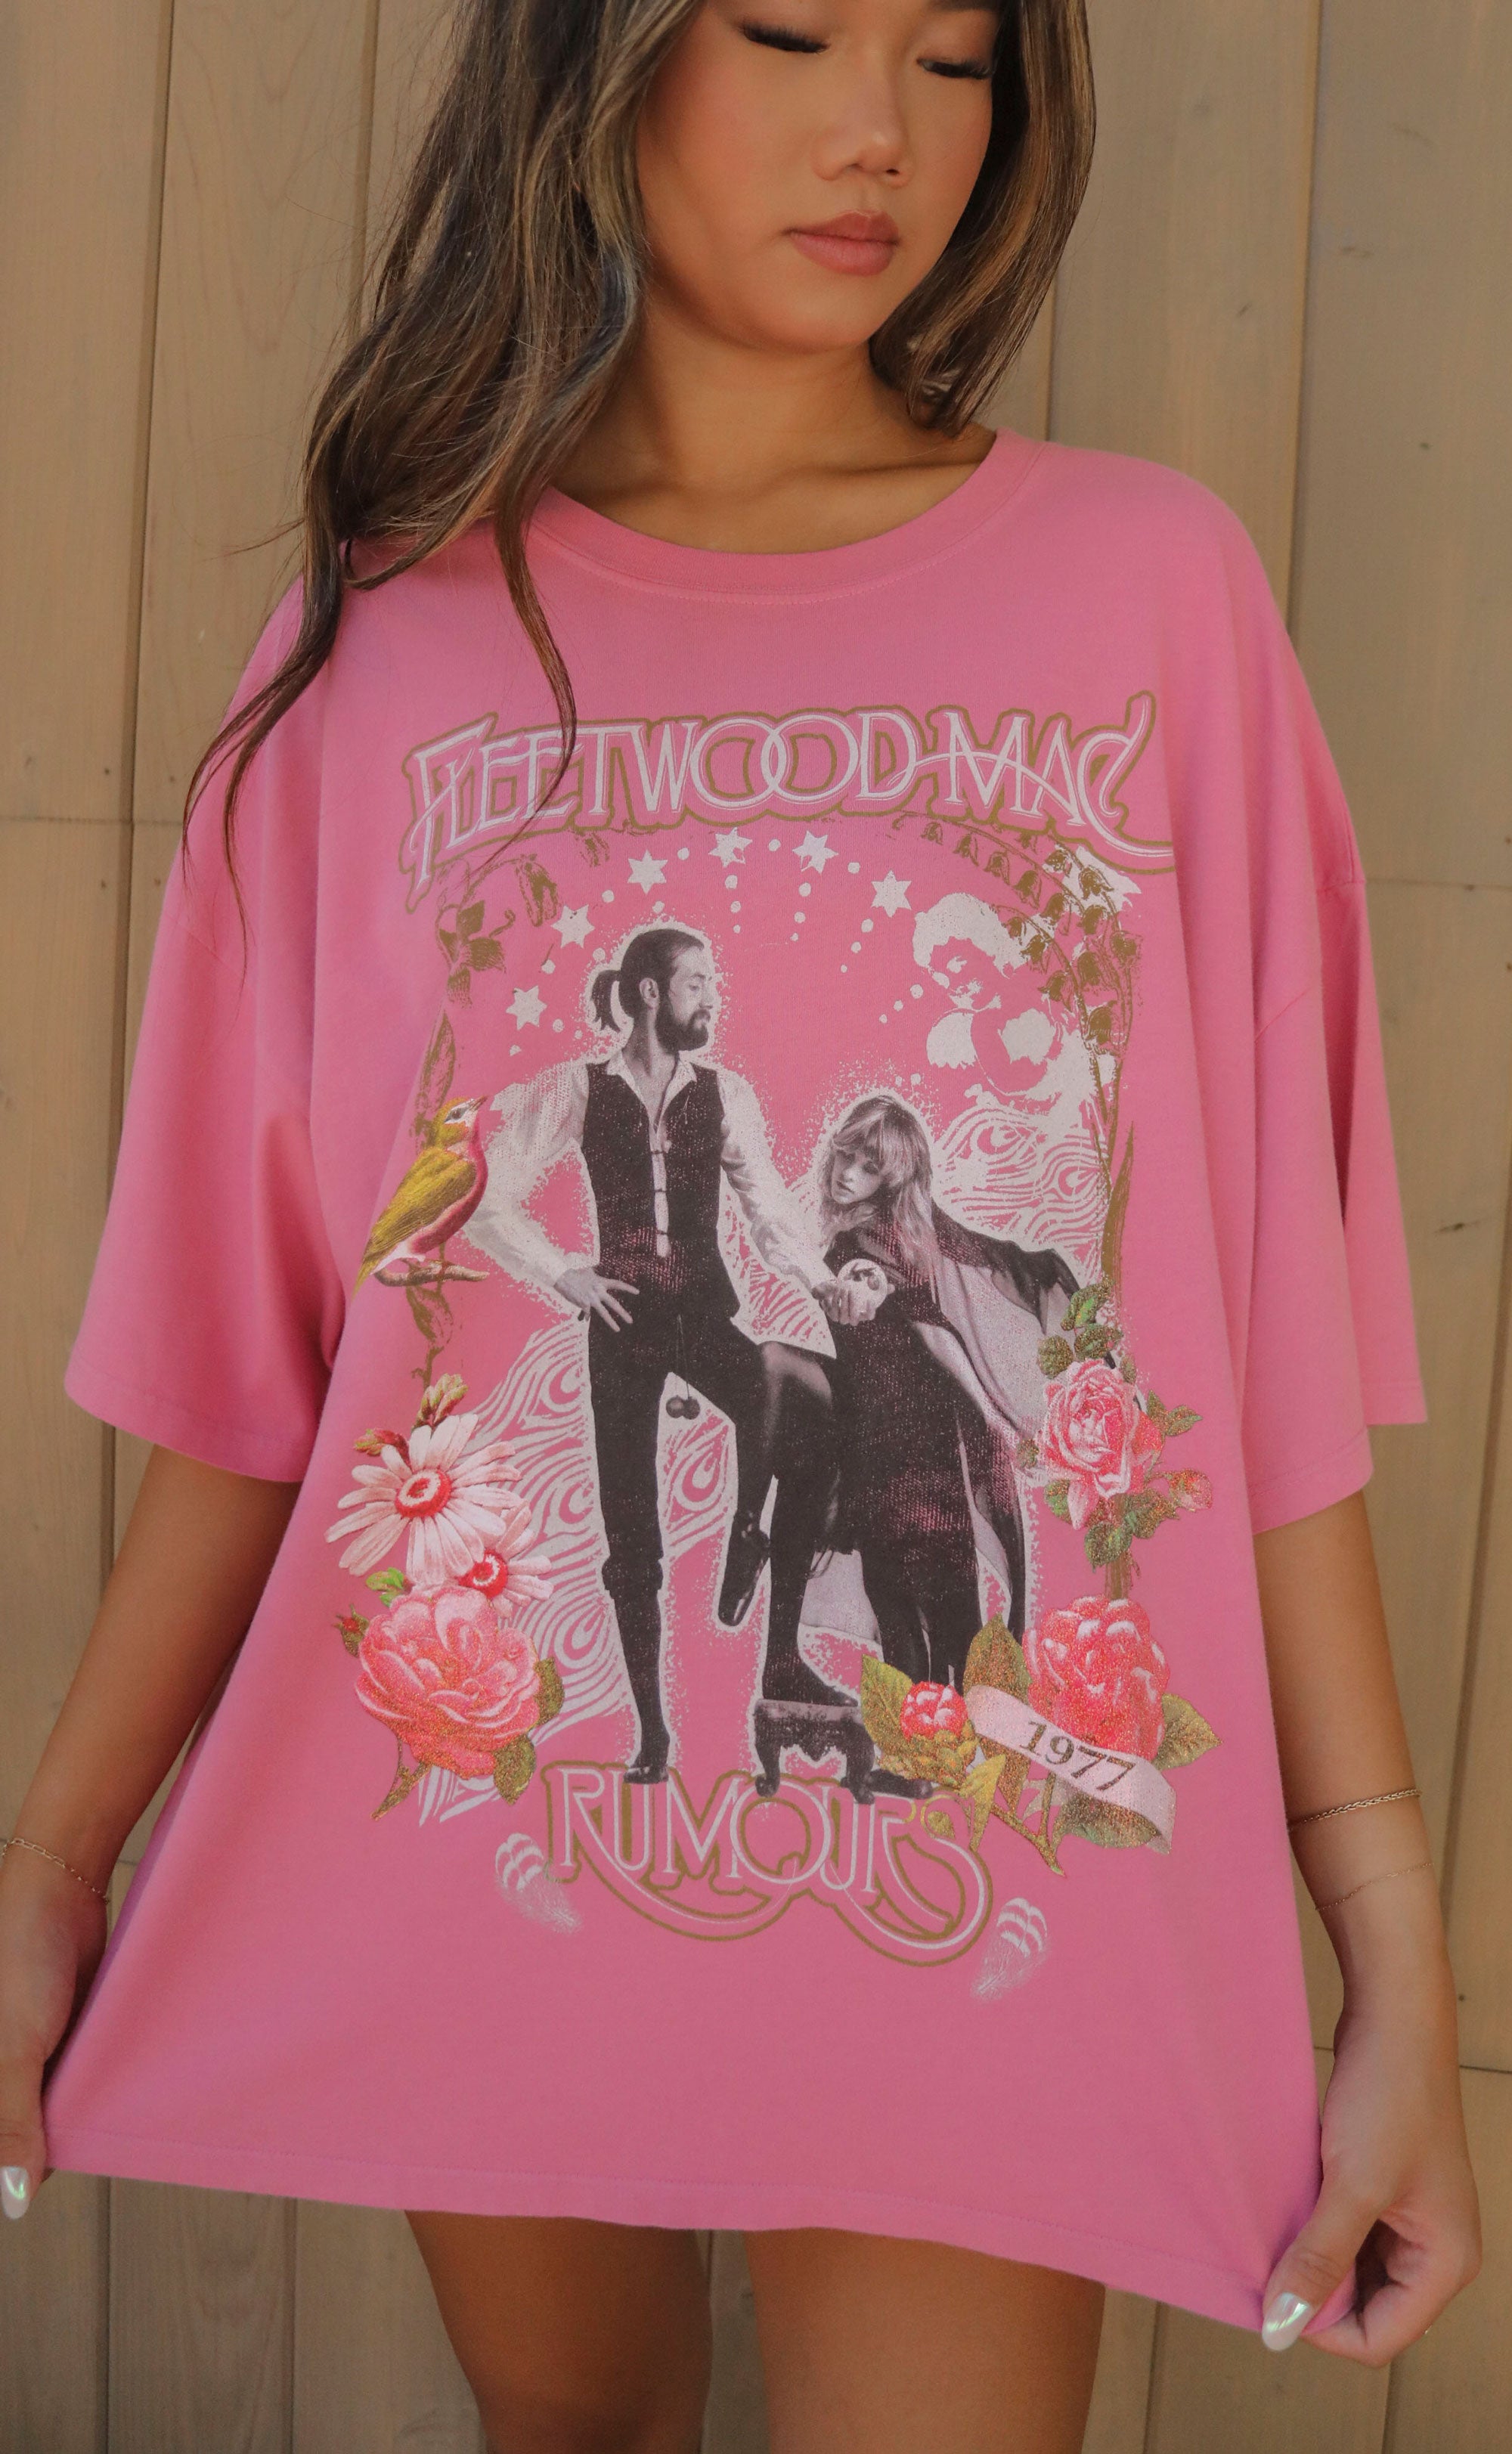 Image of daydreamer: fleetwood mac rumors one size tee - pink